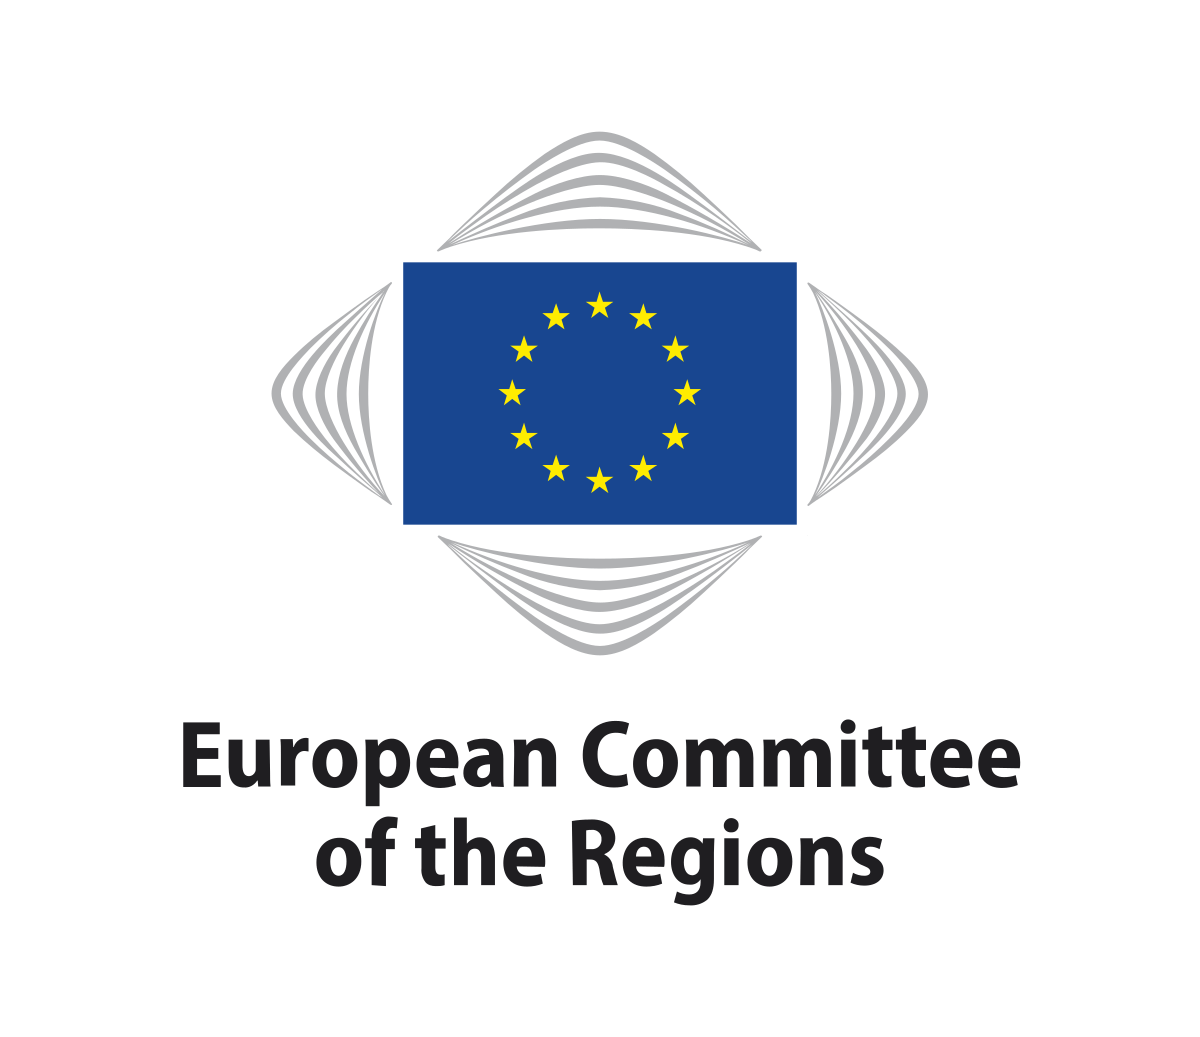 Regions Logo - European Committee of the Regions